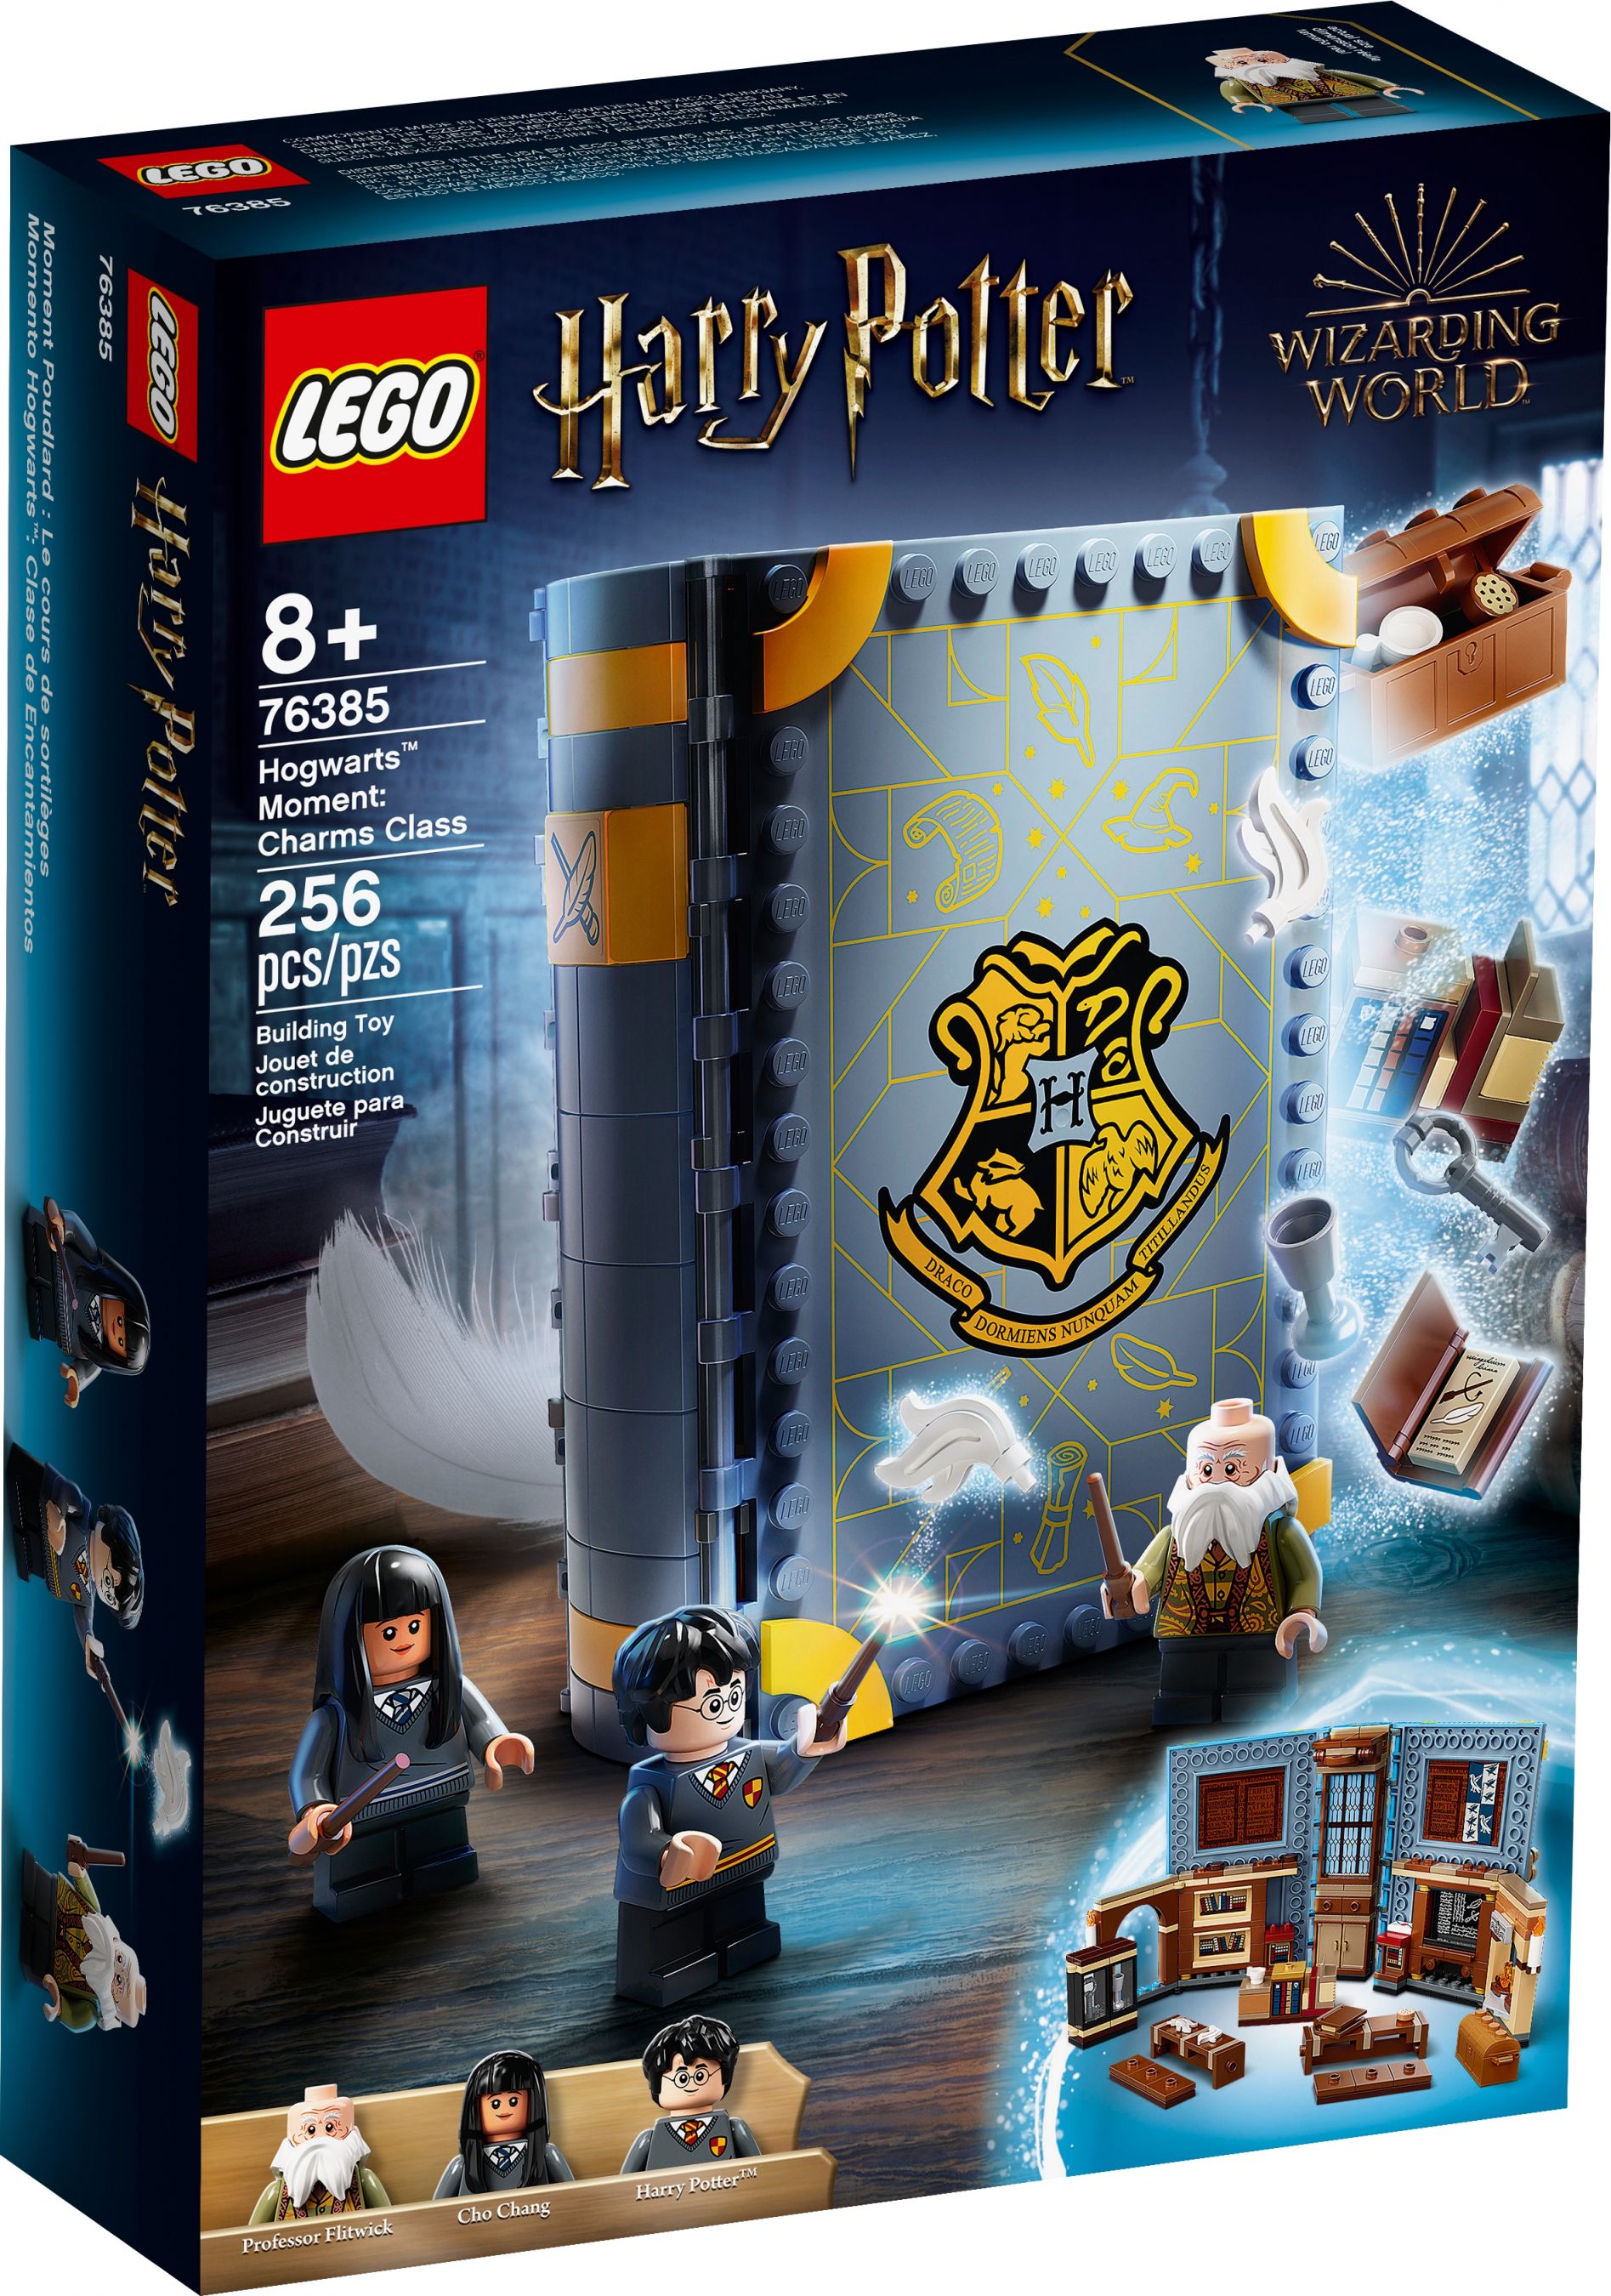 LEGO Harry Potter 76385 Hogwarts™ Moment: Zauberkunstunterricht LEGO_76385_alt1.jpg